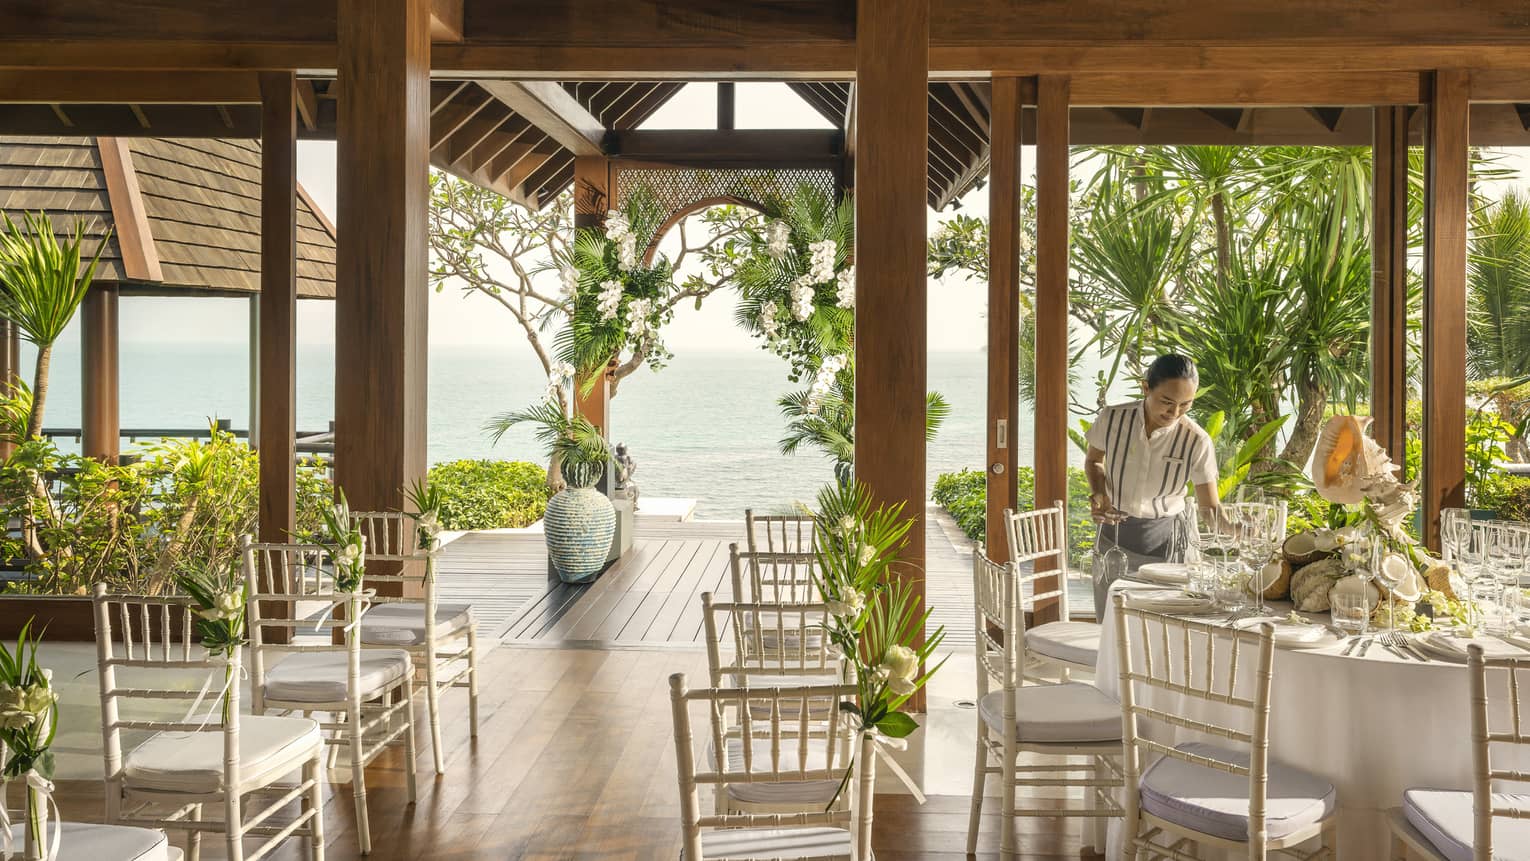 Wedding specialist sets banquet table at open-air wedding venue